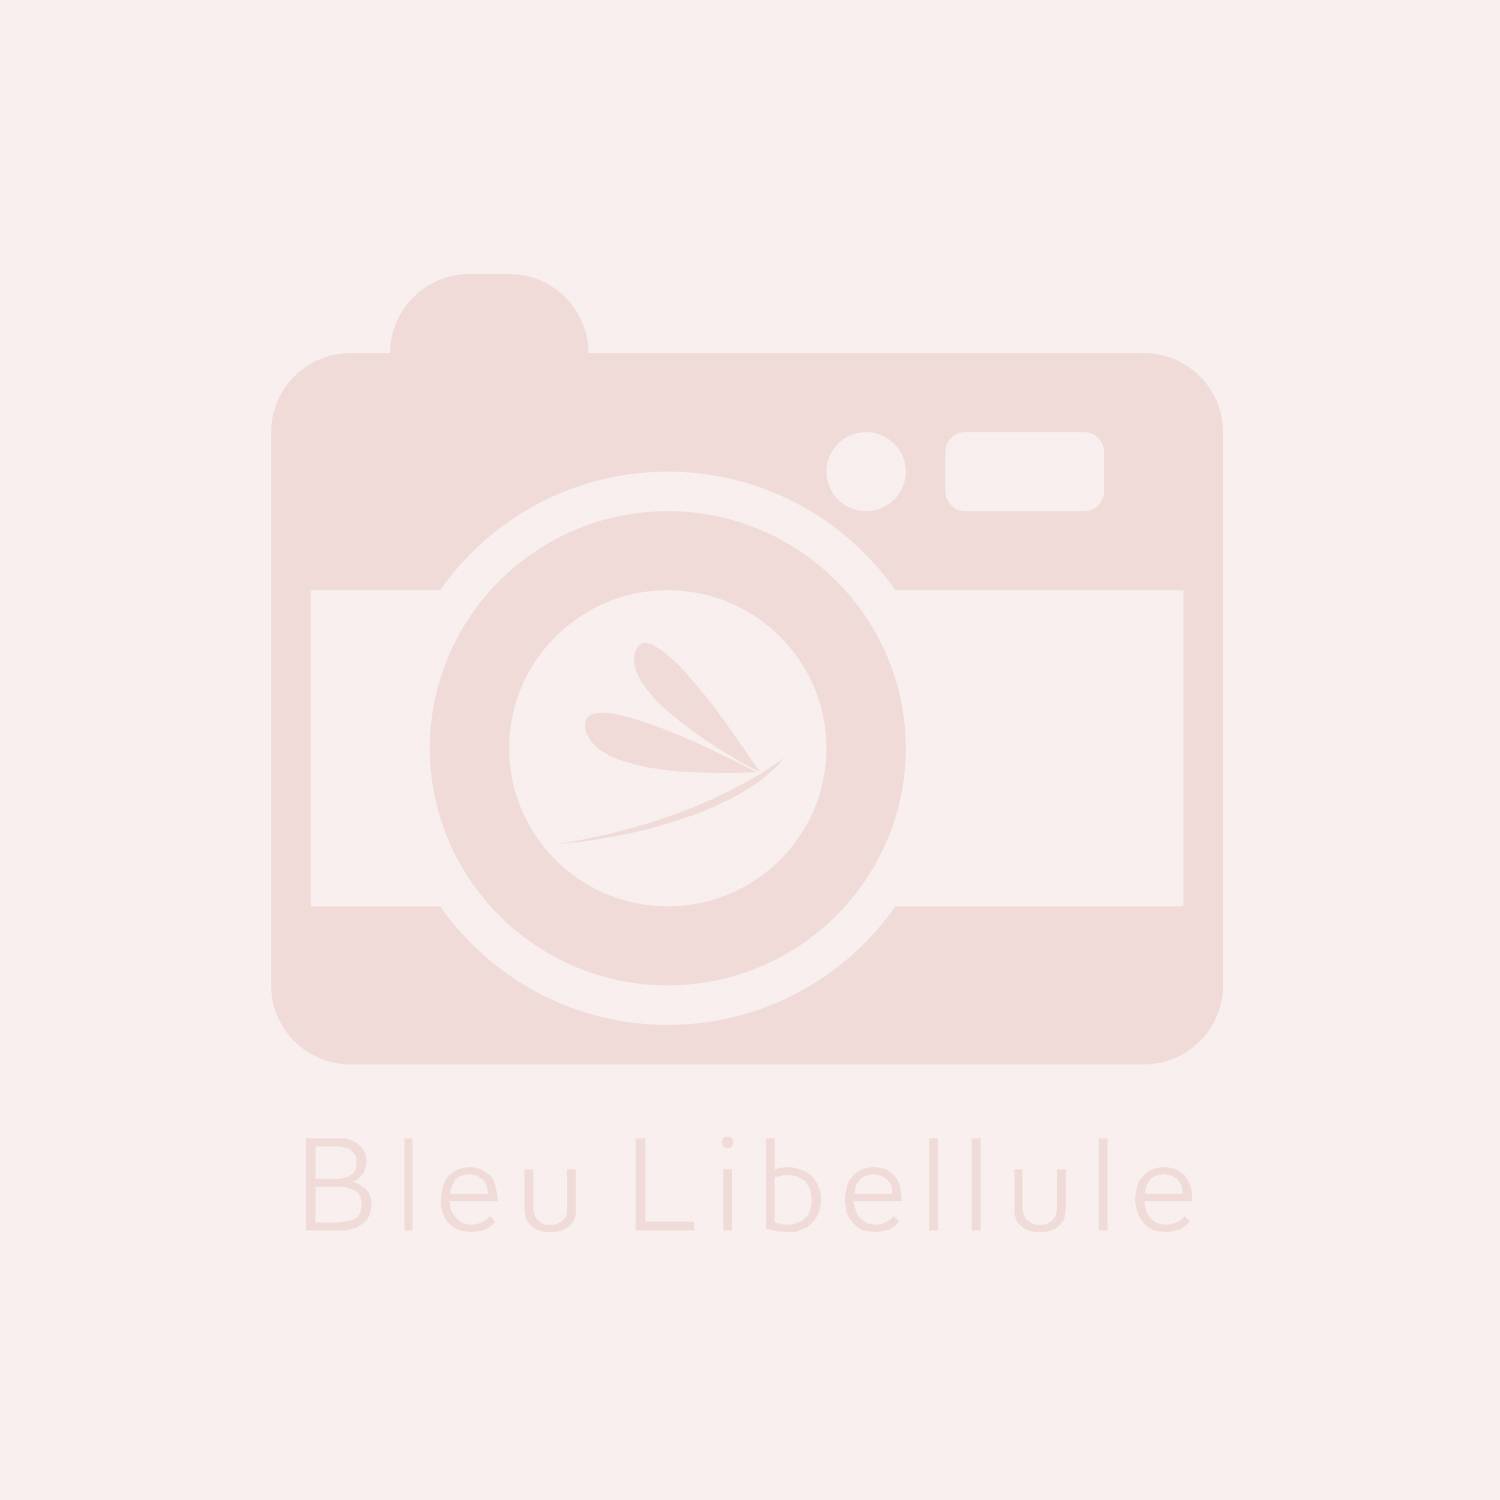 Bleu Libellule Eau de parfum Femme - Irresistible 50ML, Femme